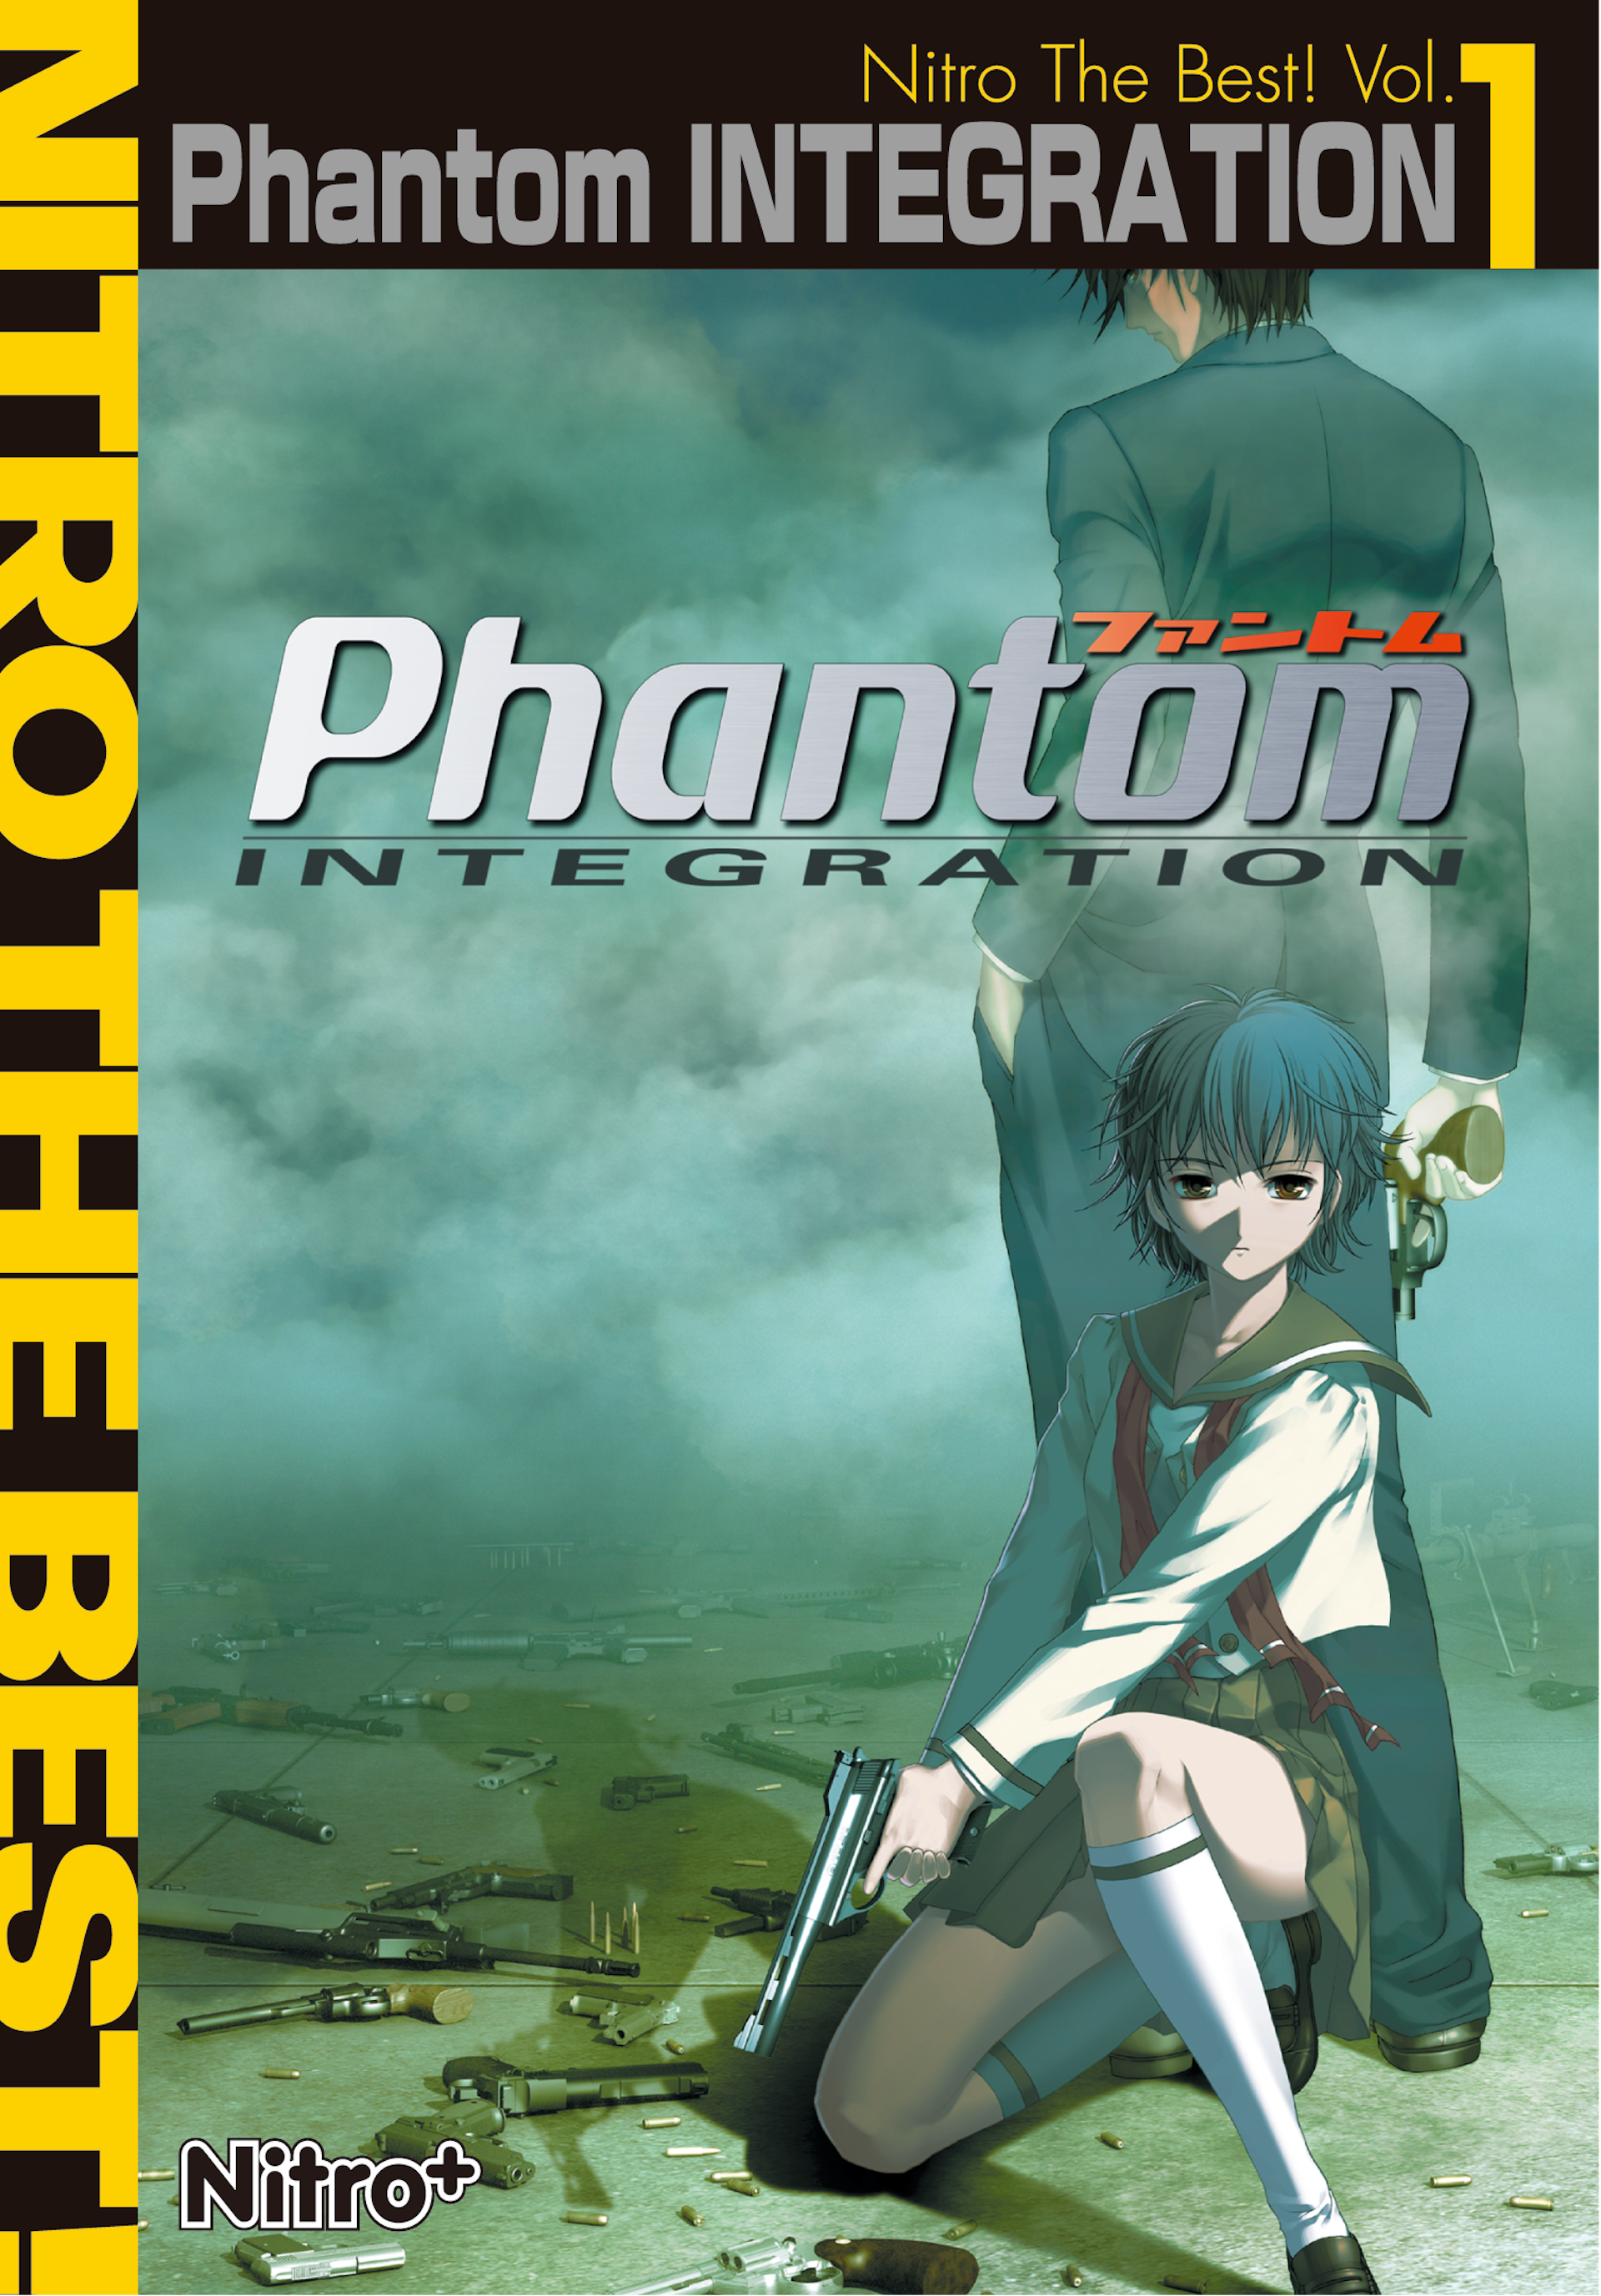 Phantom INTEGRATION Nitro The Best! Vol.1